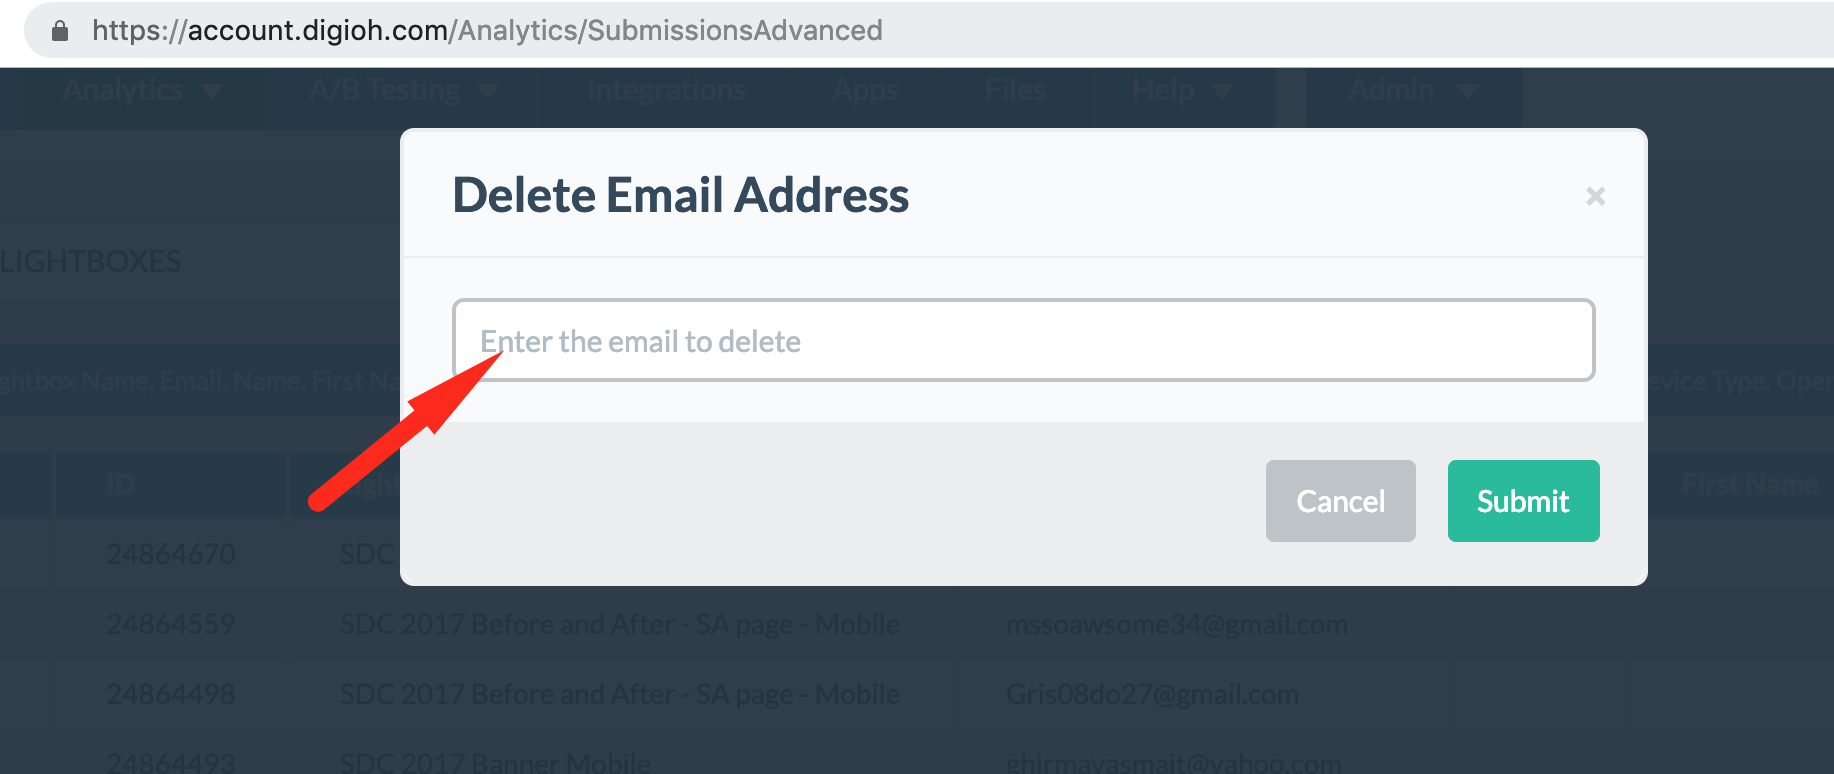 enter email address to delete